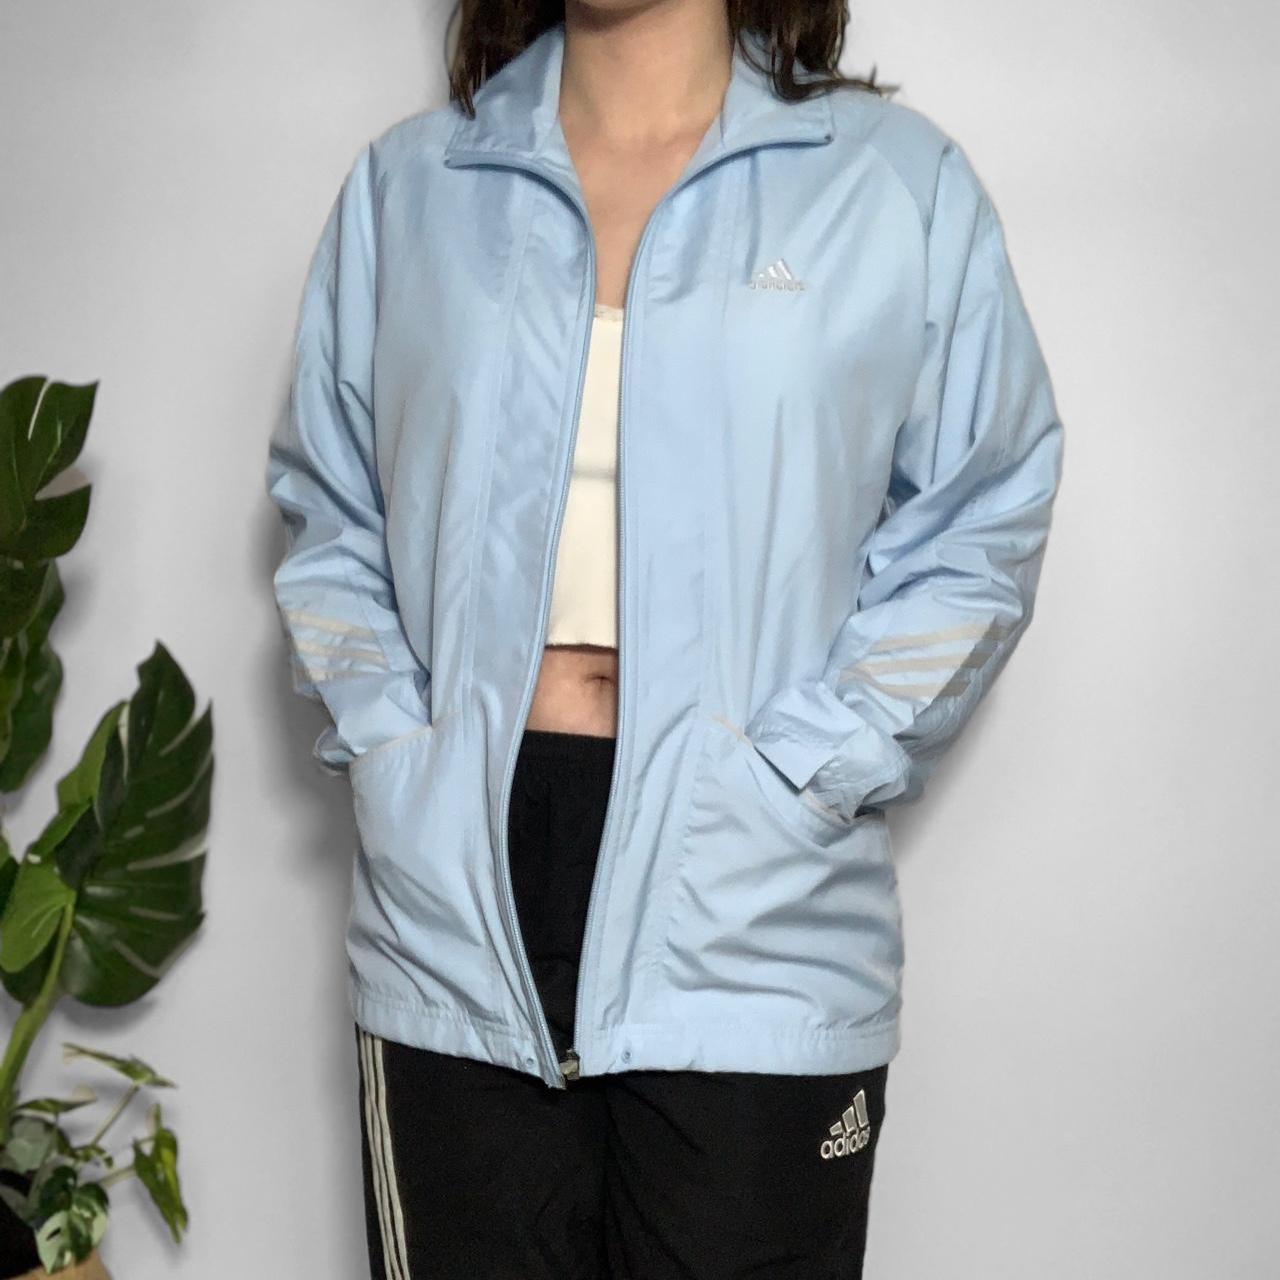 Vintage 90s Adidas deadstock zip up water resistant windbreaker jacket